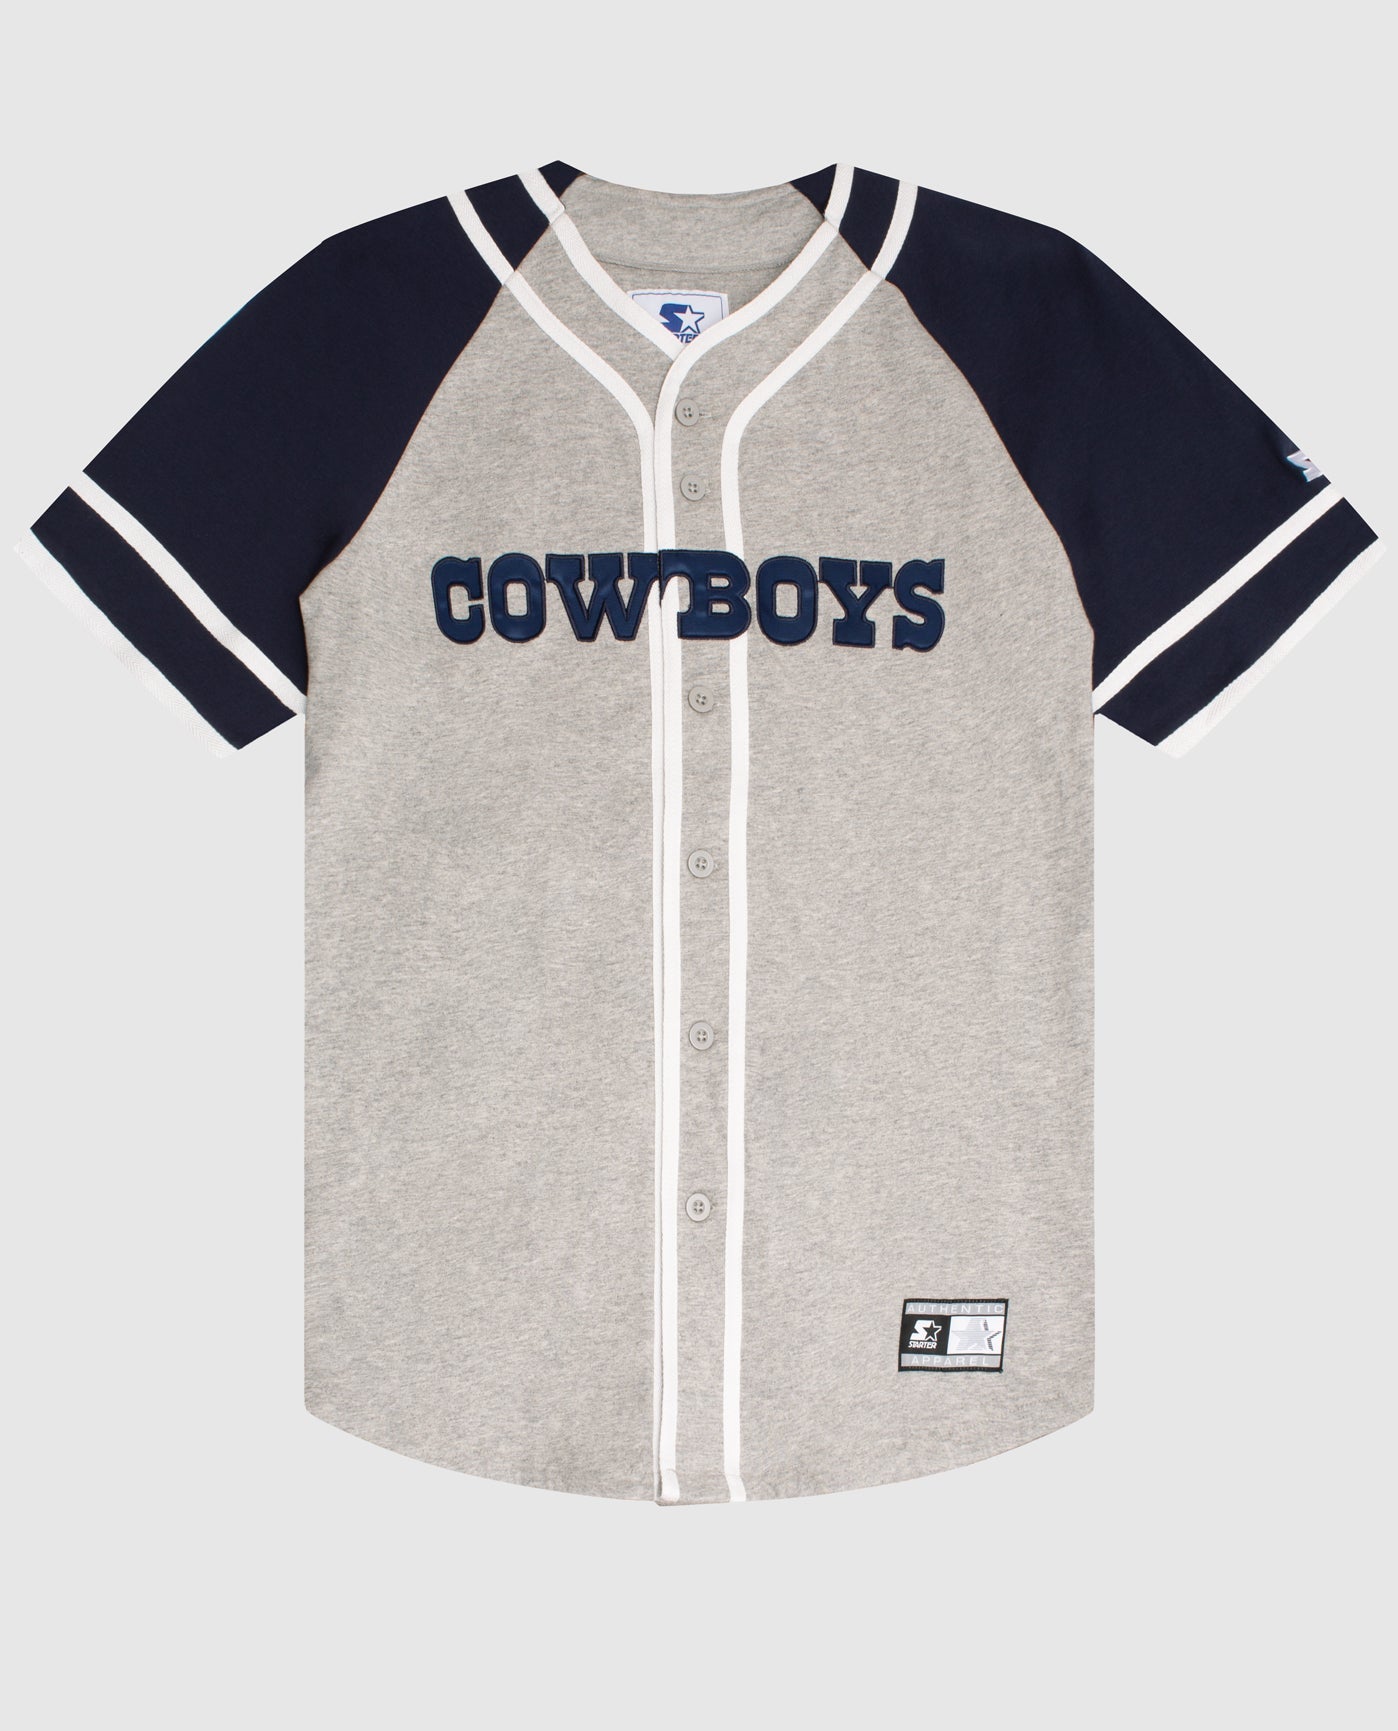 New York Yankees Jersey Button Up Shirt MLB Genuine Merchandise Starter  Men's L